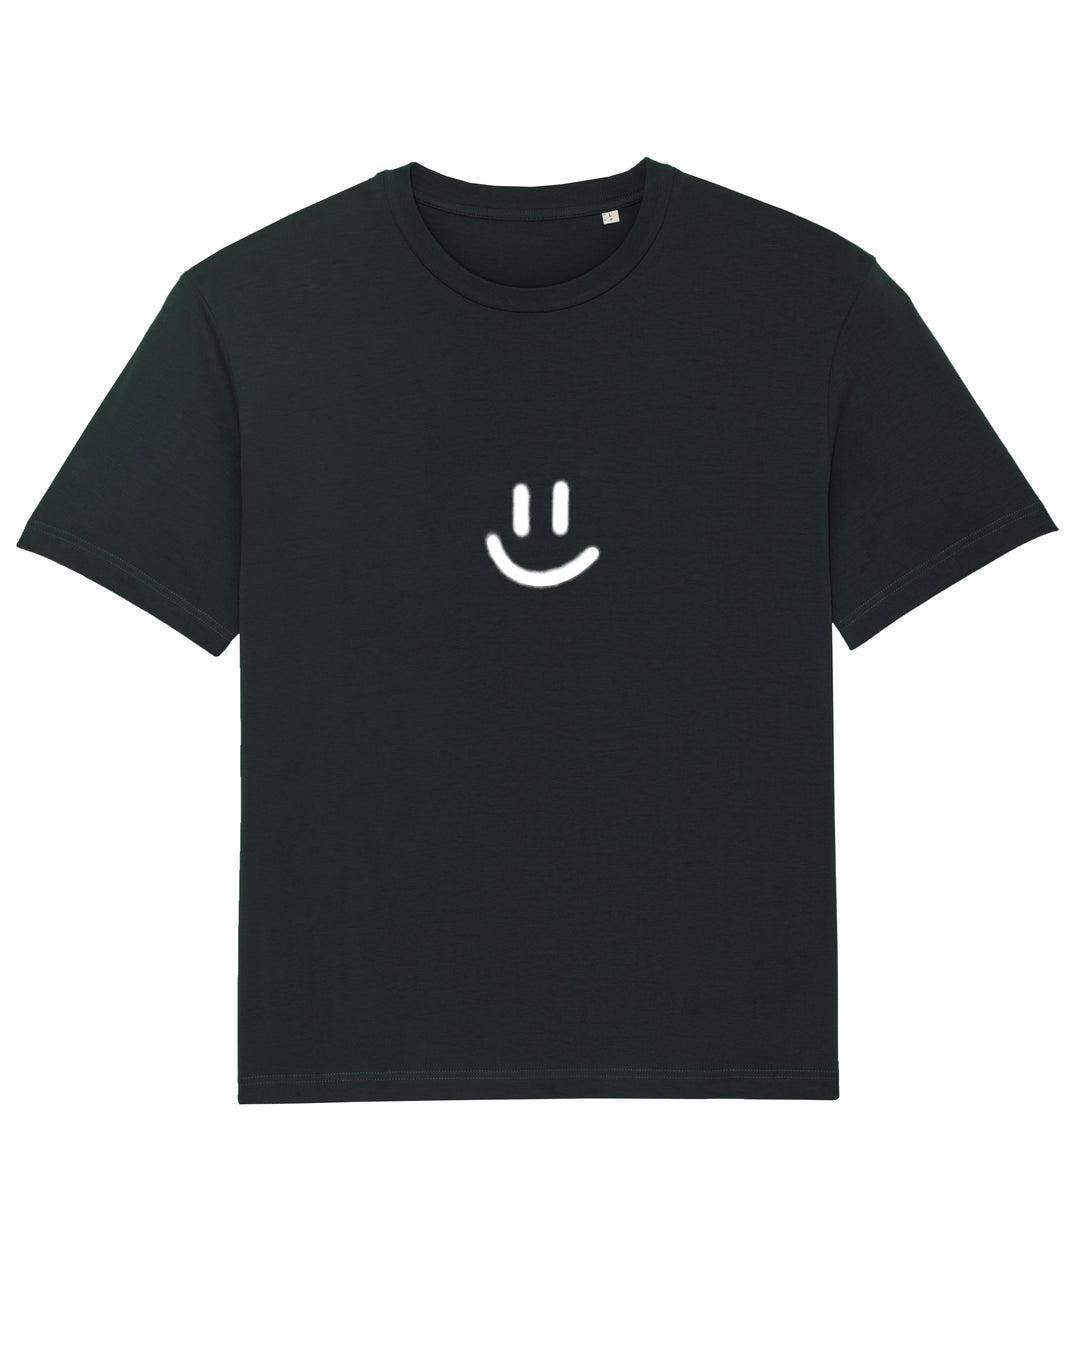 Deniz Bul - Freestyle T-Shirt (black)